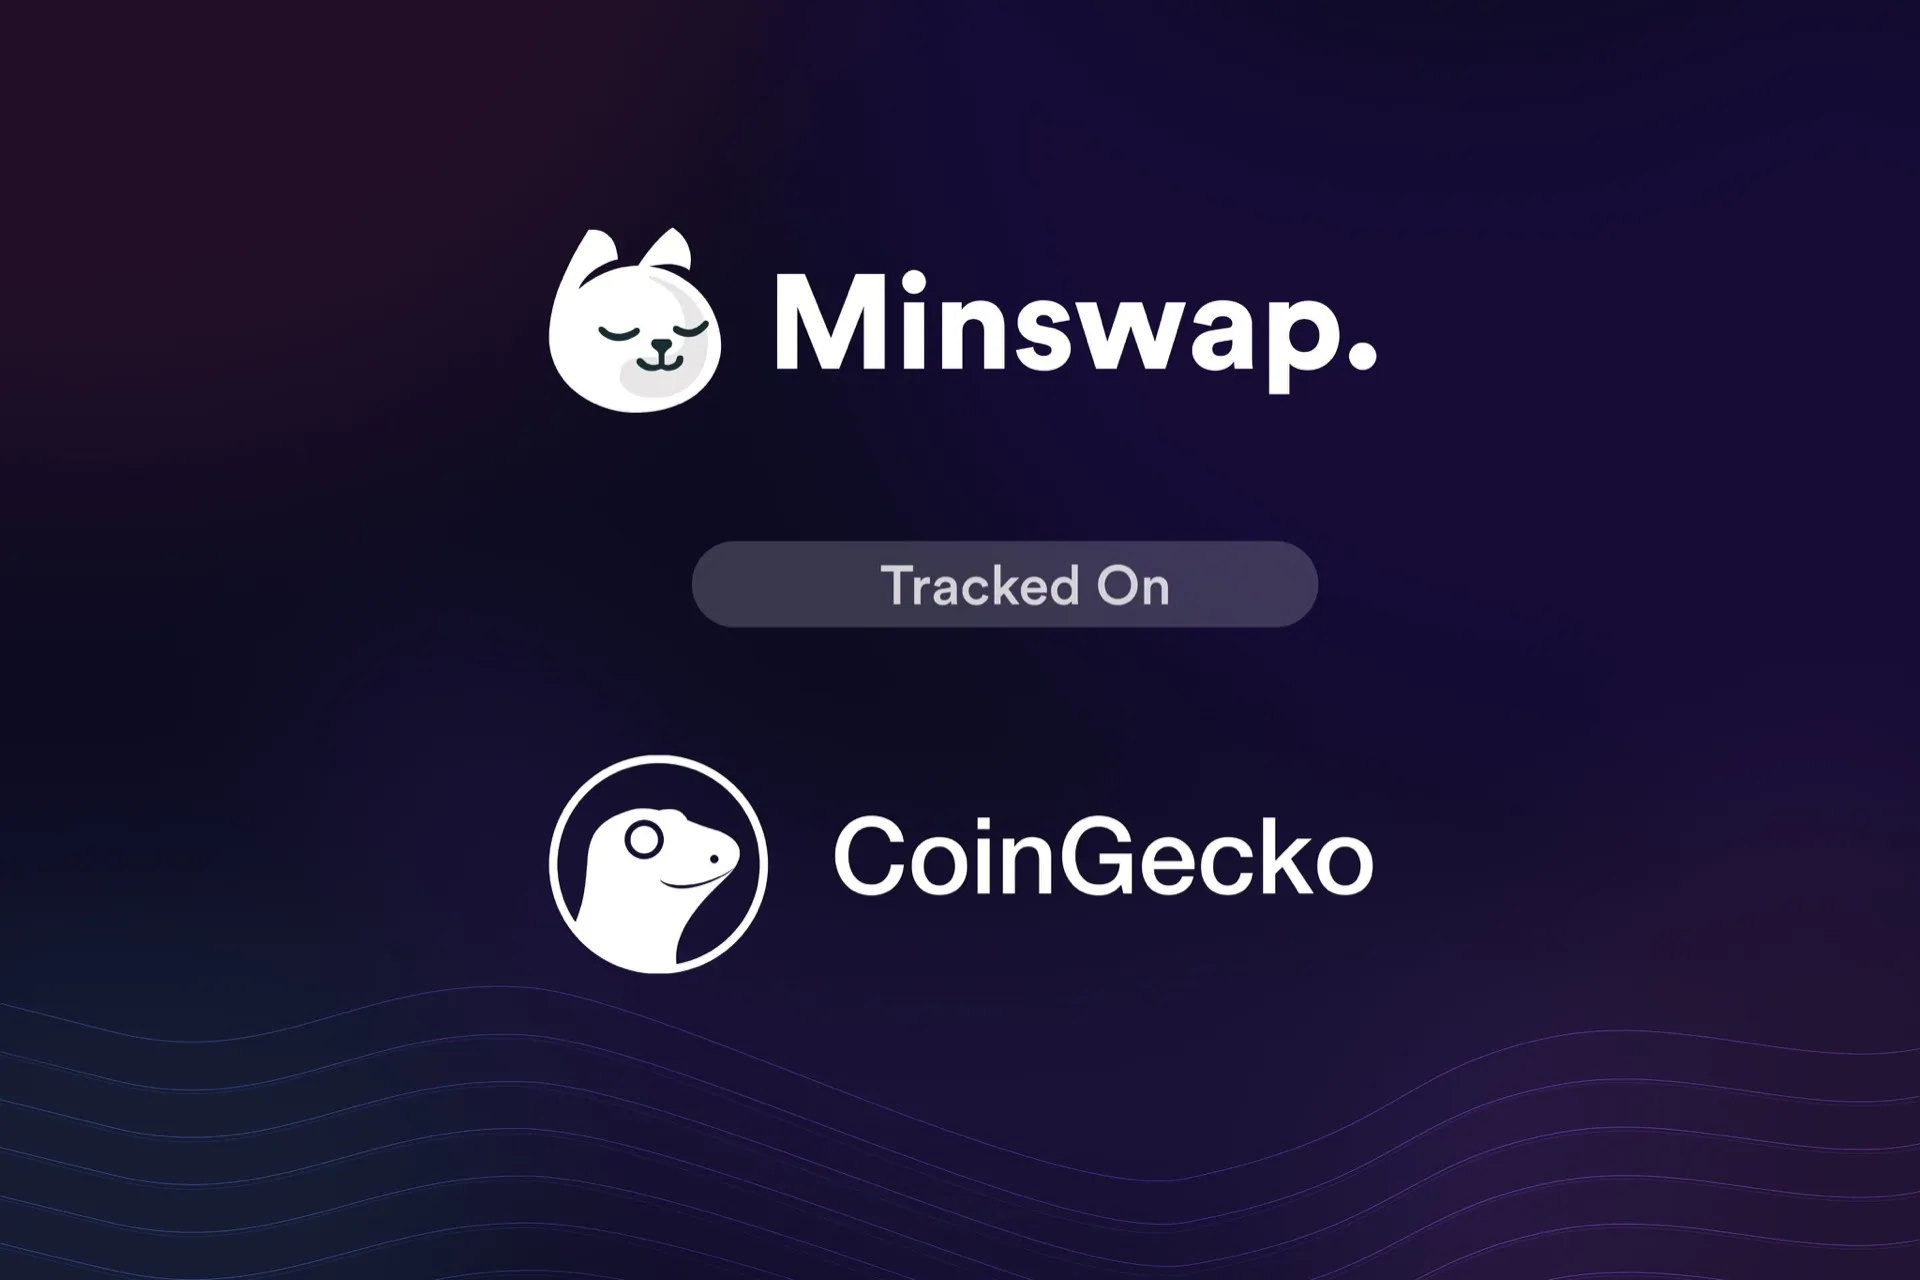 Coingecko lists tokens traded on MinSwap